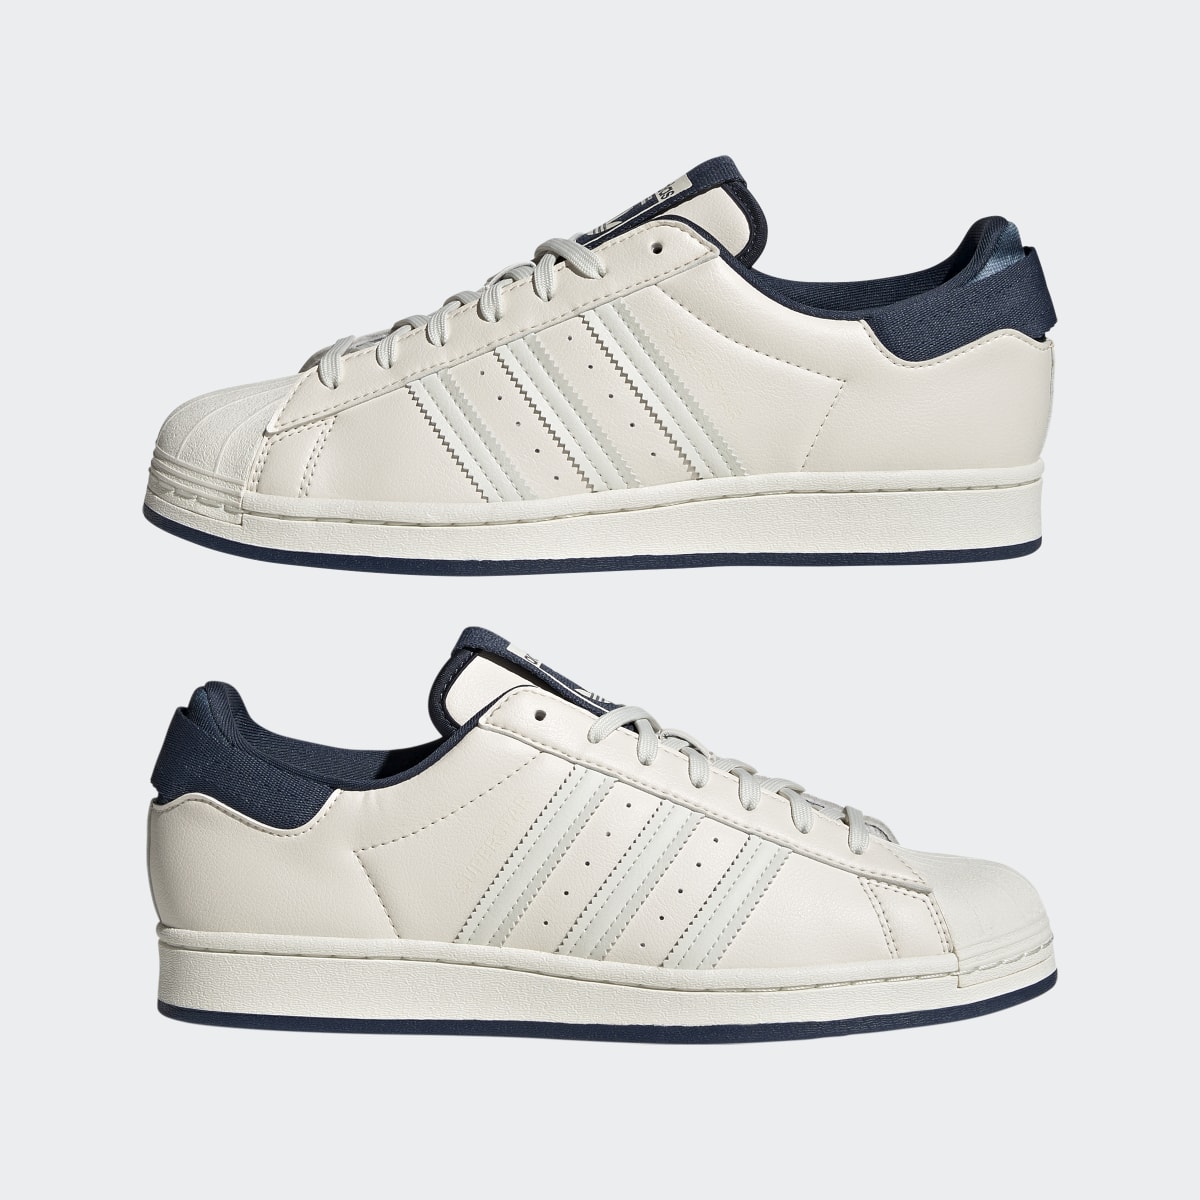 Adidas Superstar Shoes. 11